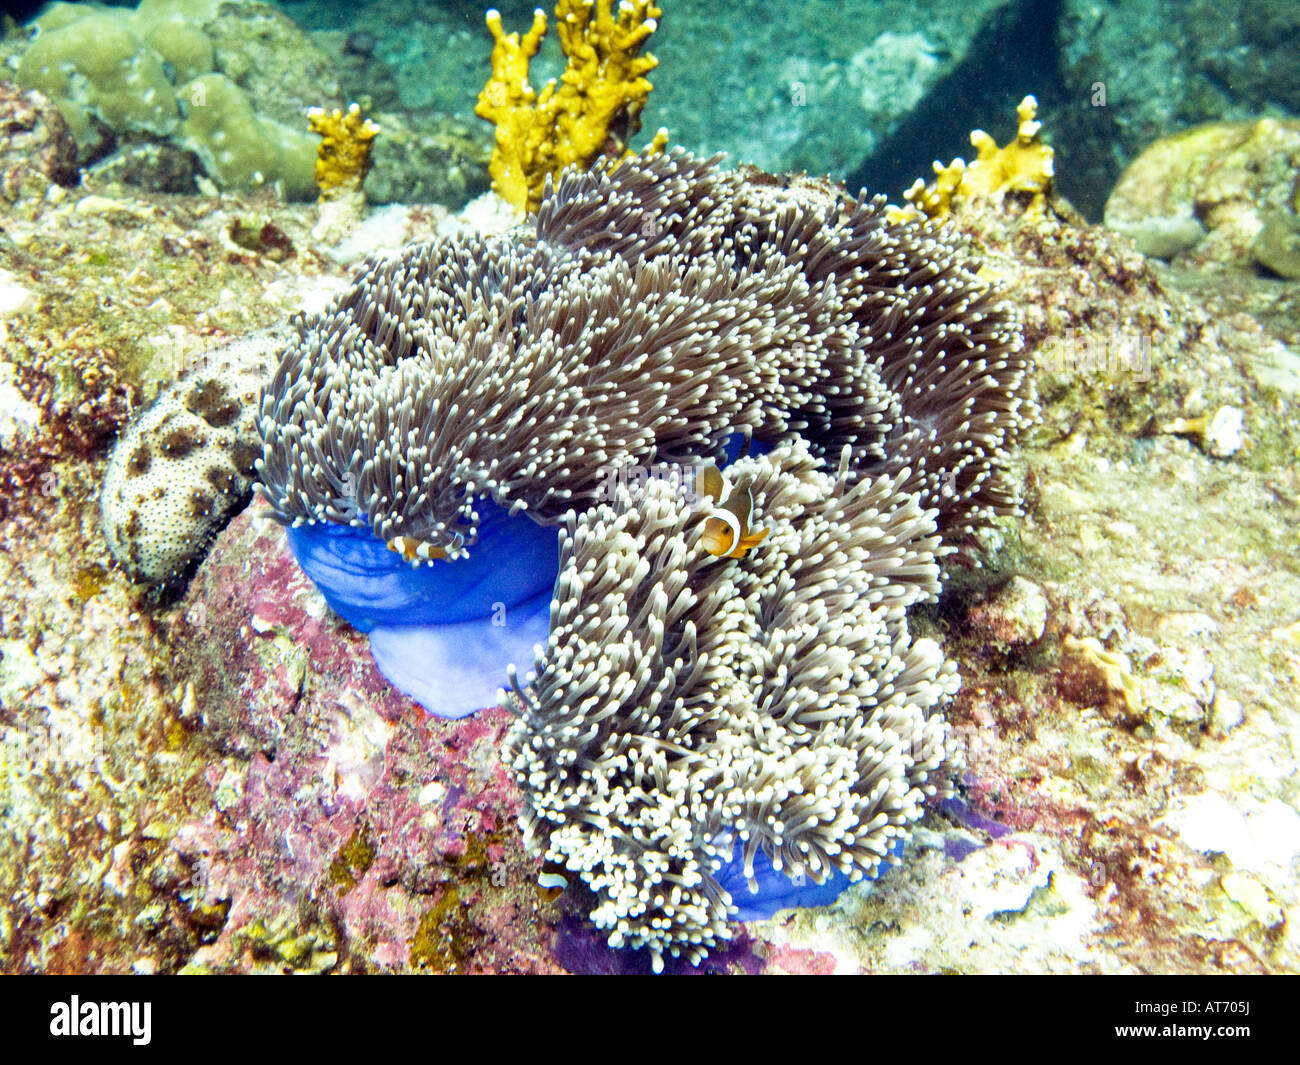 Anemone fish in blue magnificent sea anemone, Heteractis magnifica Stock Photo